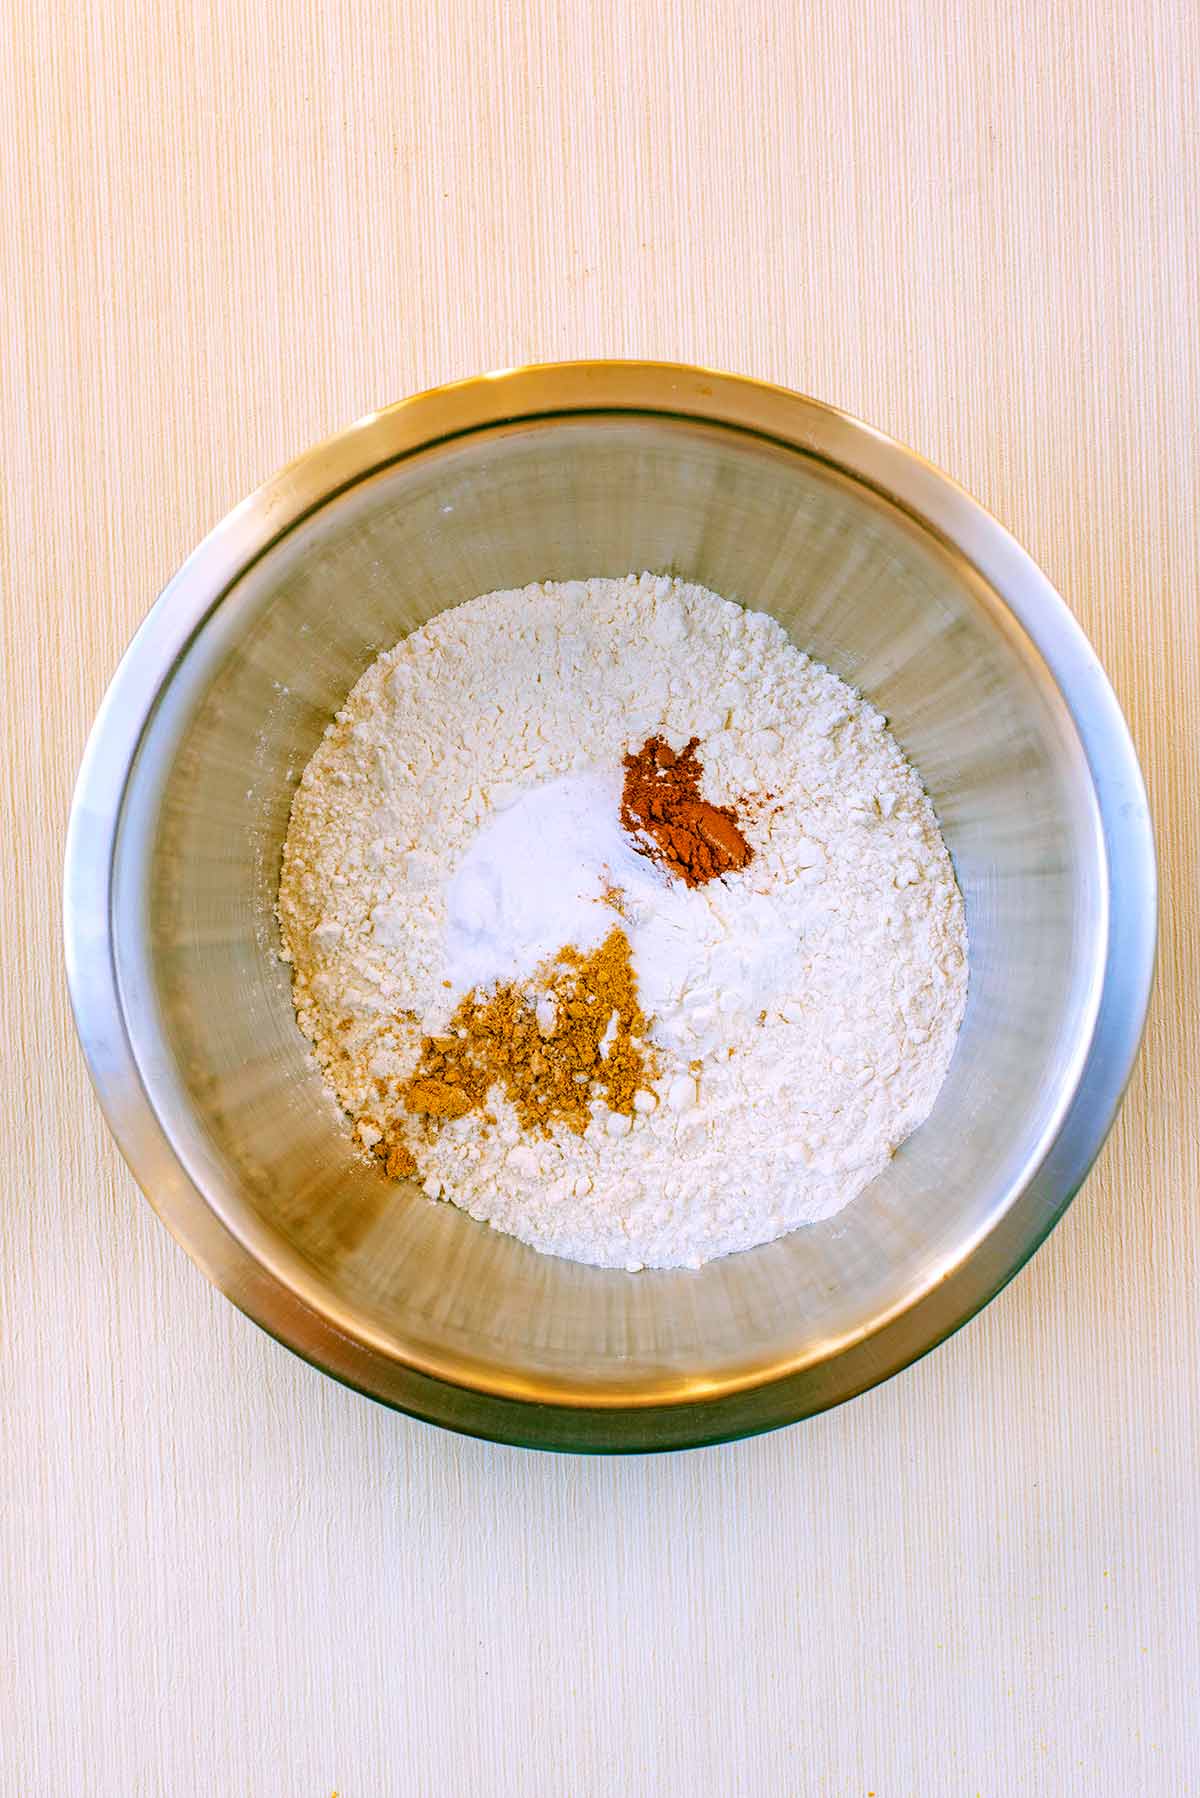 A mixing bowl containing flour, baking powder, baking soda, cinnamon, ginger and salt.